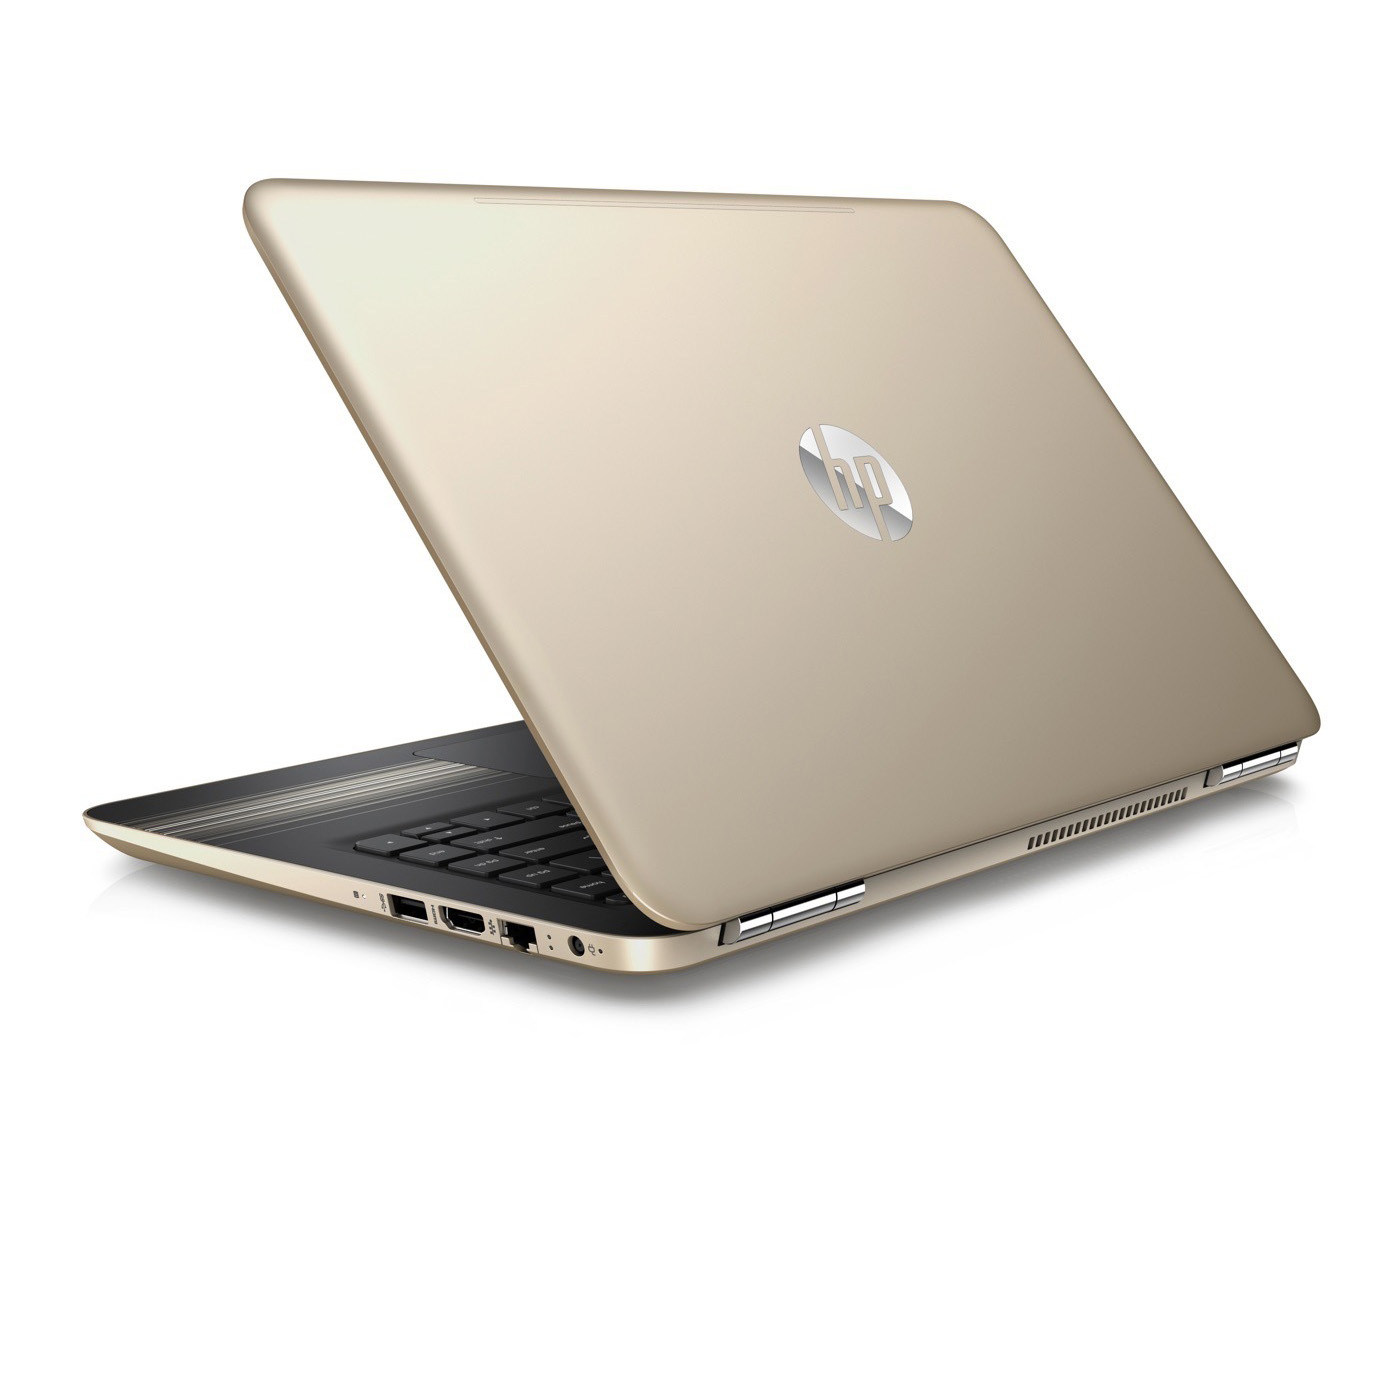 Laptop HP Core i3 Pavilion x360 11-u047tu (X3C25PA) (Gold)